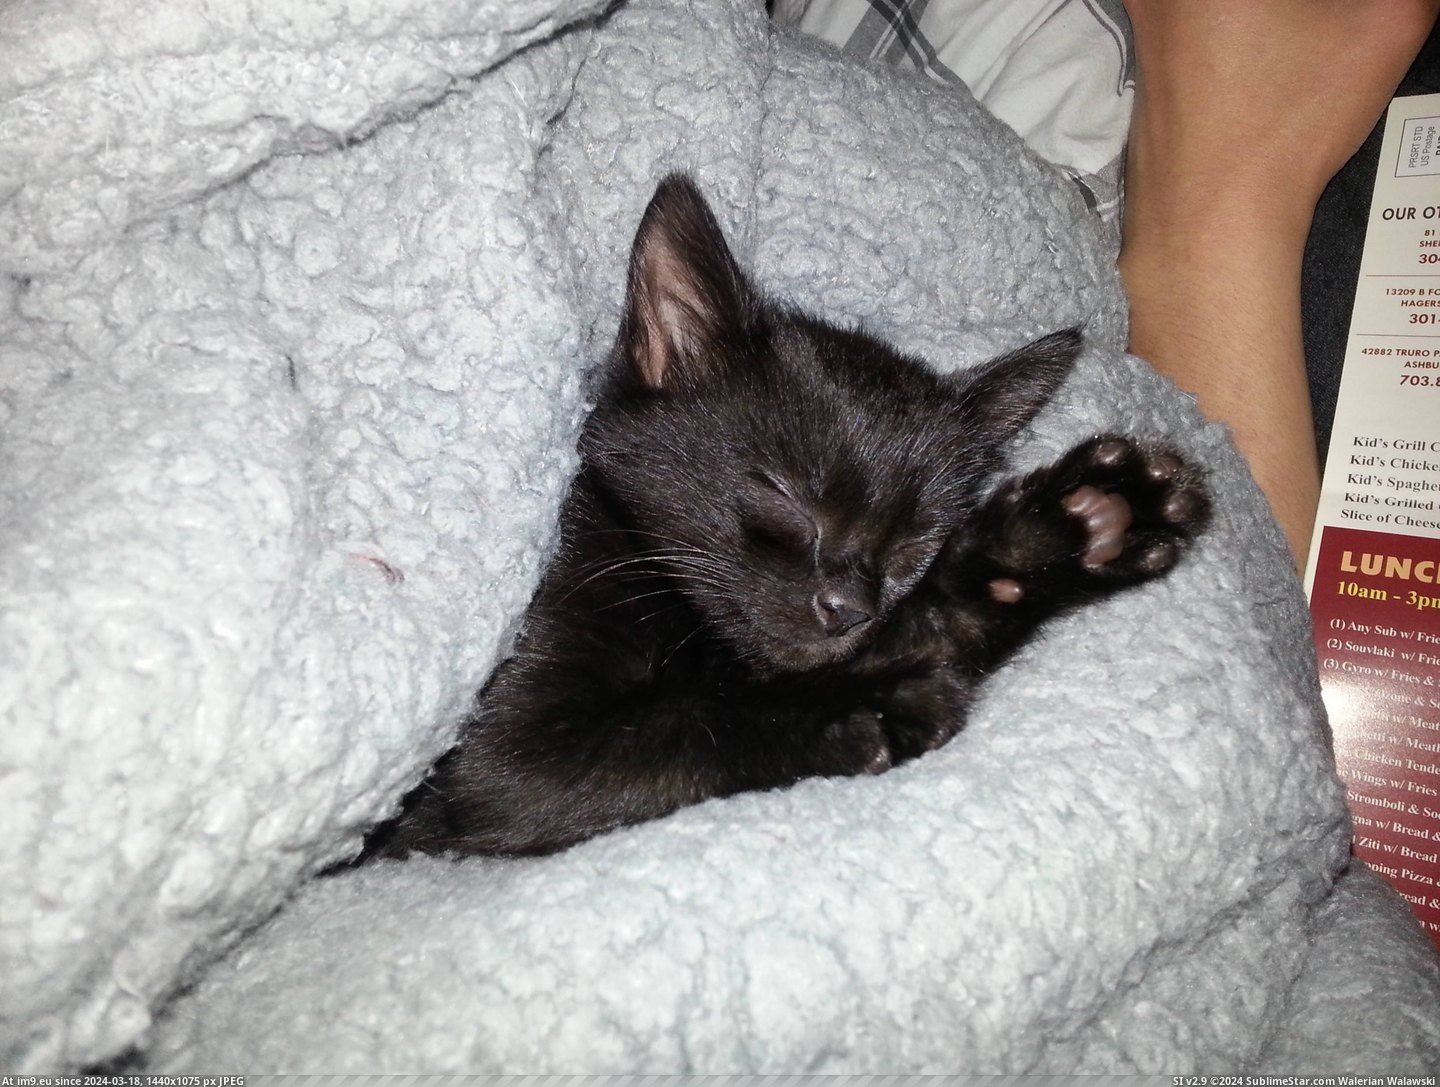 #Cats #Cat #Wake #Caturday #Plz #Black #Friday [Cats] Black cat Friday? Wake me when it's Caturday plz Pic. (Изображение из альбом My r/CATS favs))